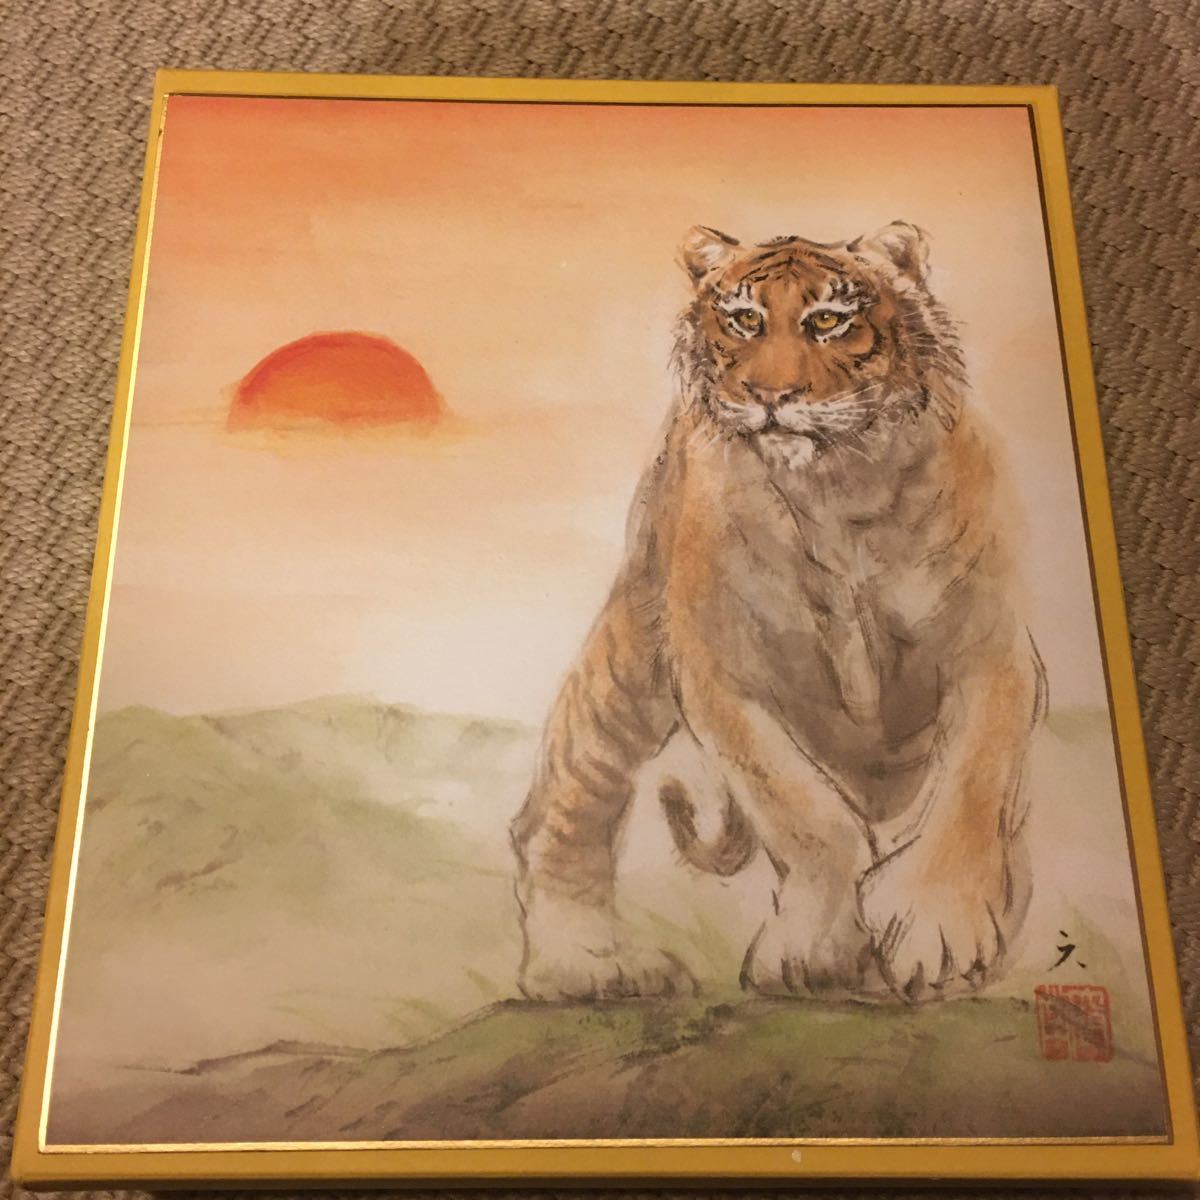 Buy it now Fujiwara Rokugen-do Zodiac Shikishi Tiger Reproduction Shikishi Painting Japanese Painting Zodiac Tiger Shipping \230, Artwork, book, colored paper